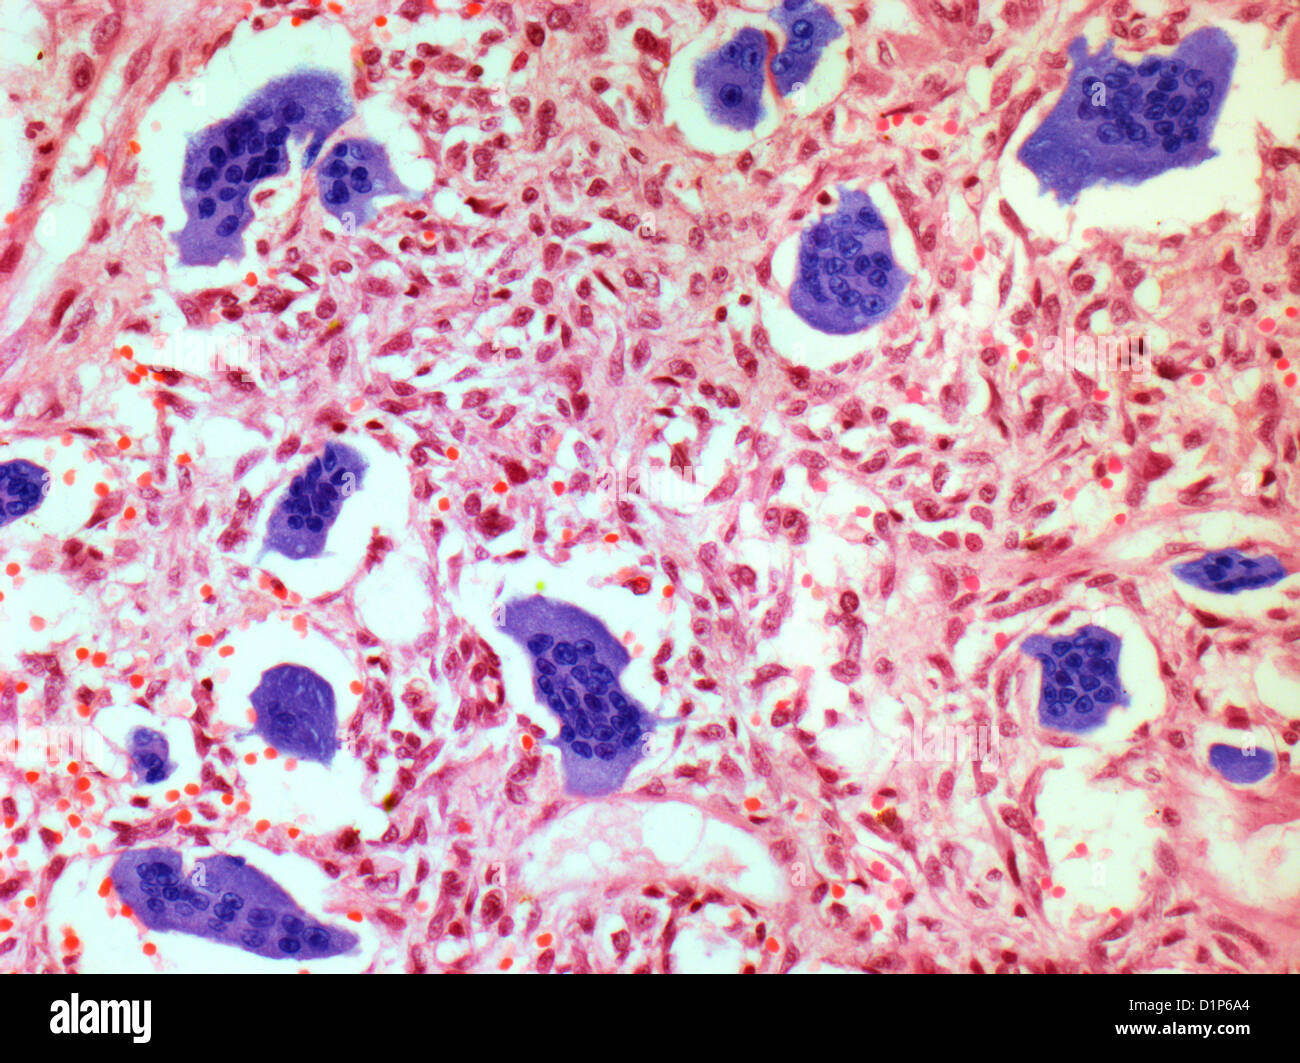 Bone tumour, light micrograph Stock Photo